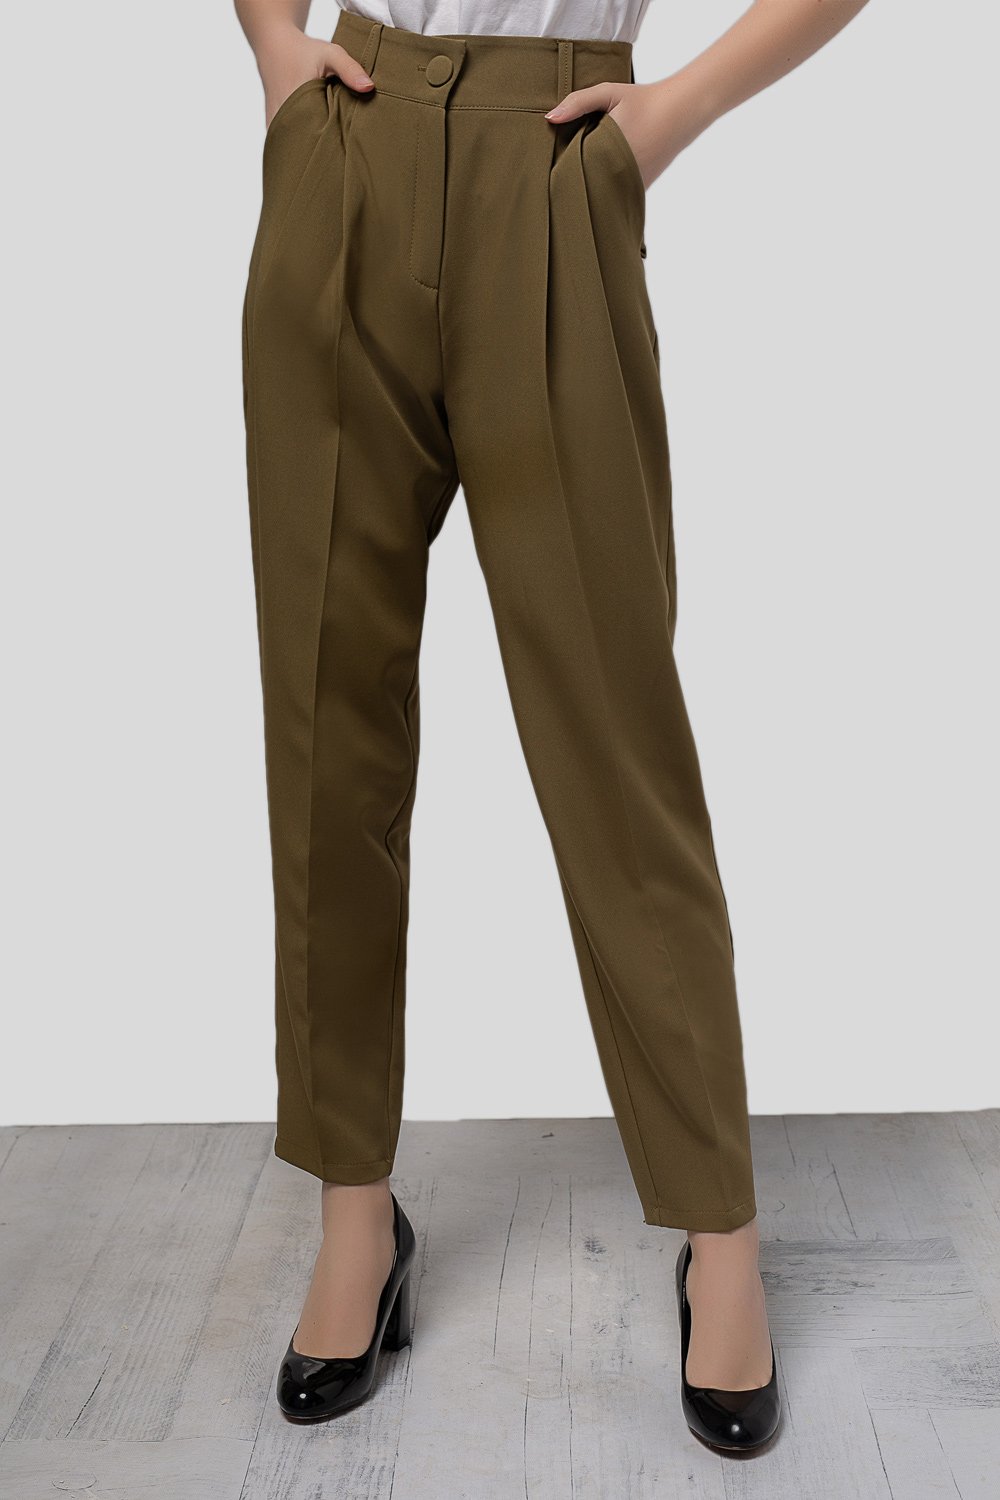 Khaki color darted trousers